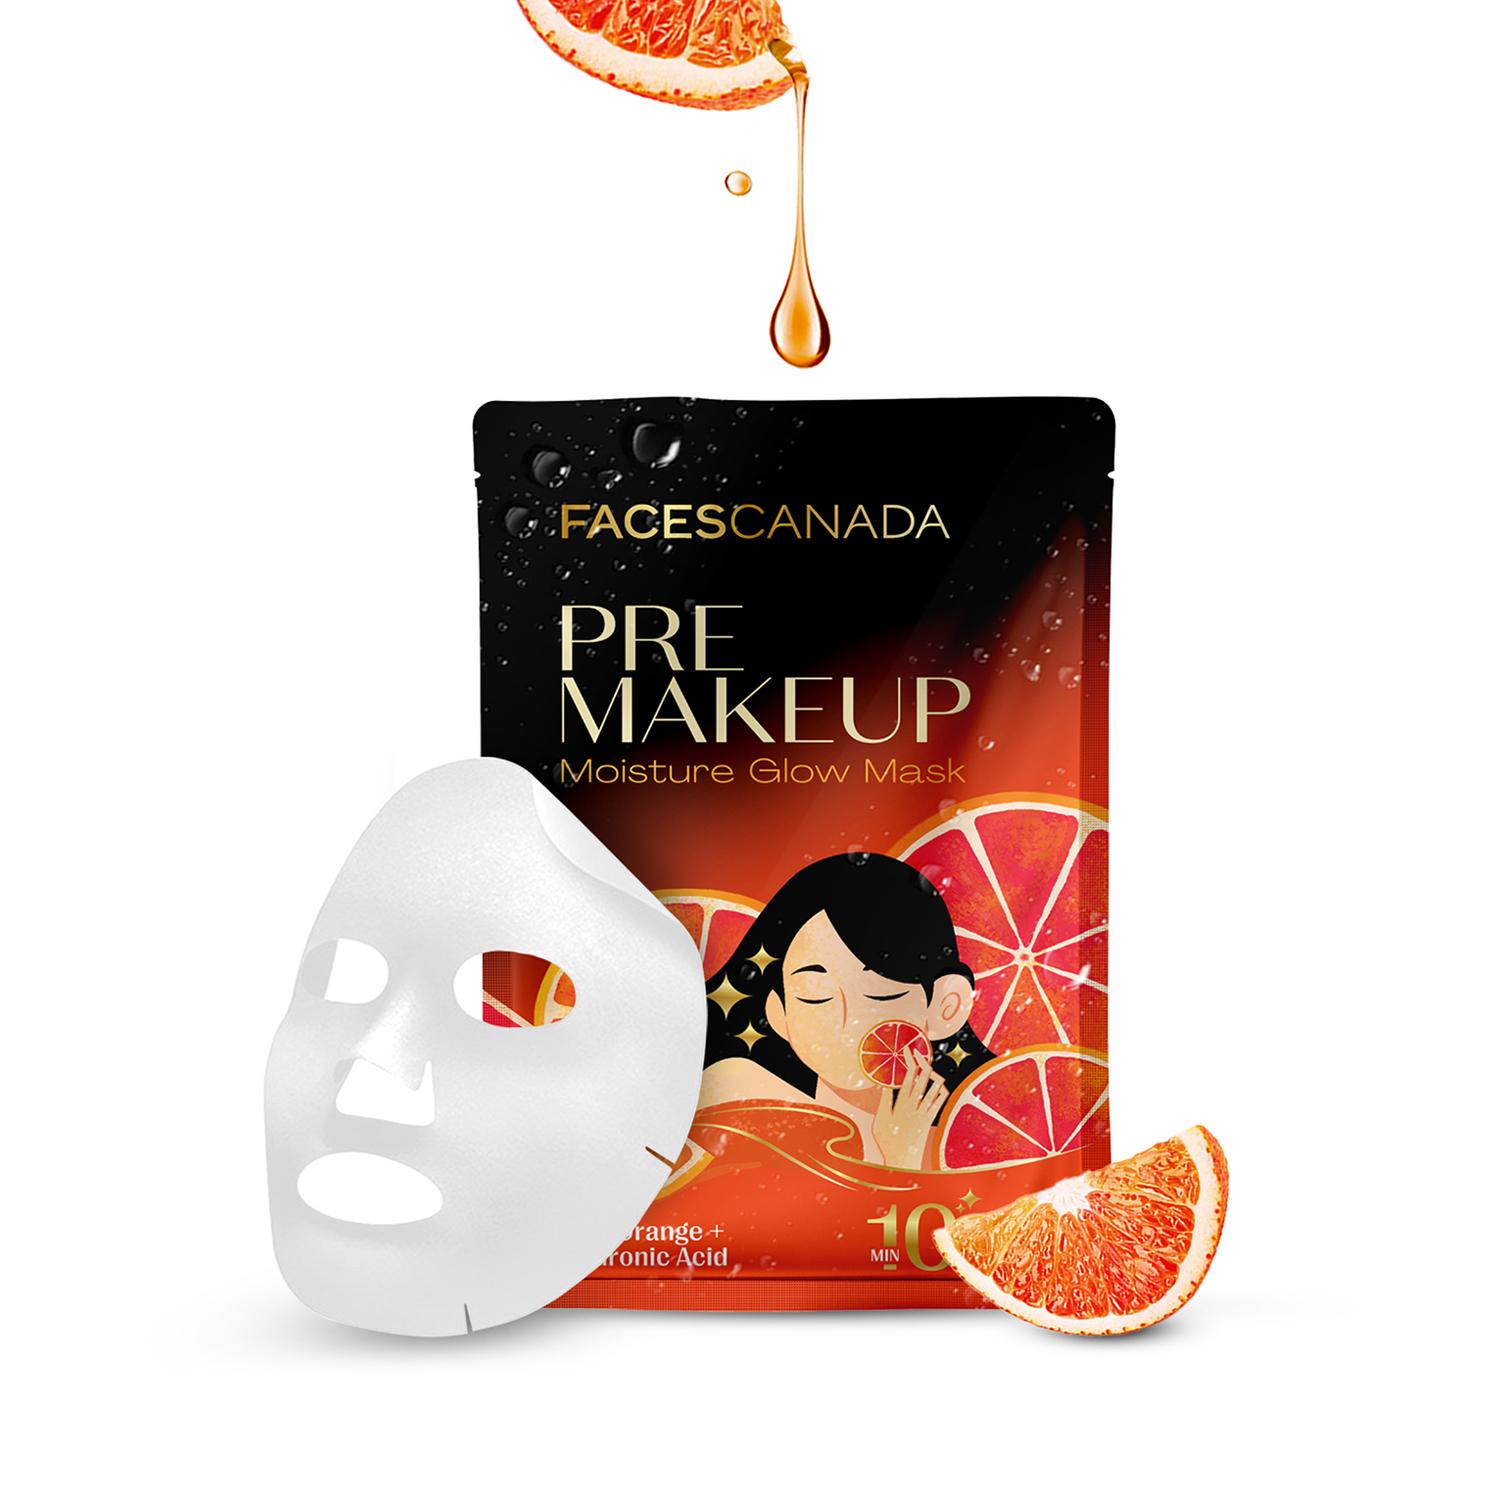 Faces Canada | Faces Canada Pre-Makeup Moisture Glow Mask (20 g)